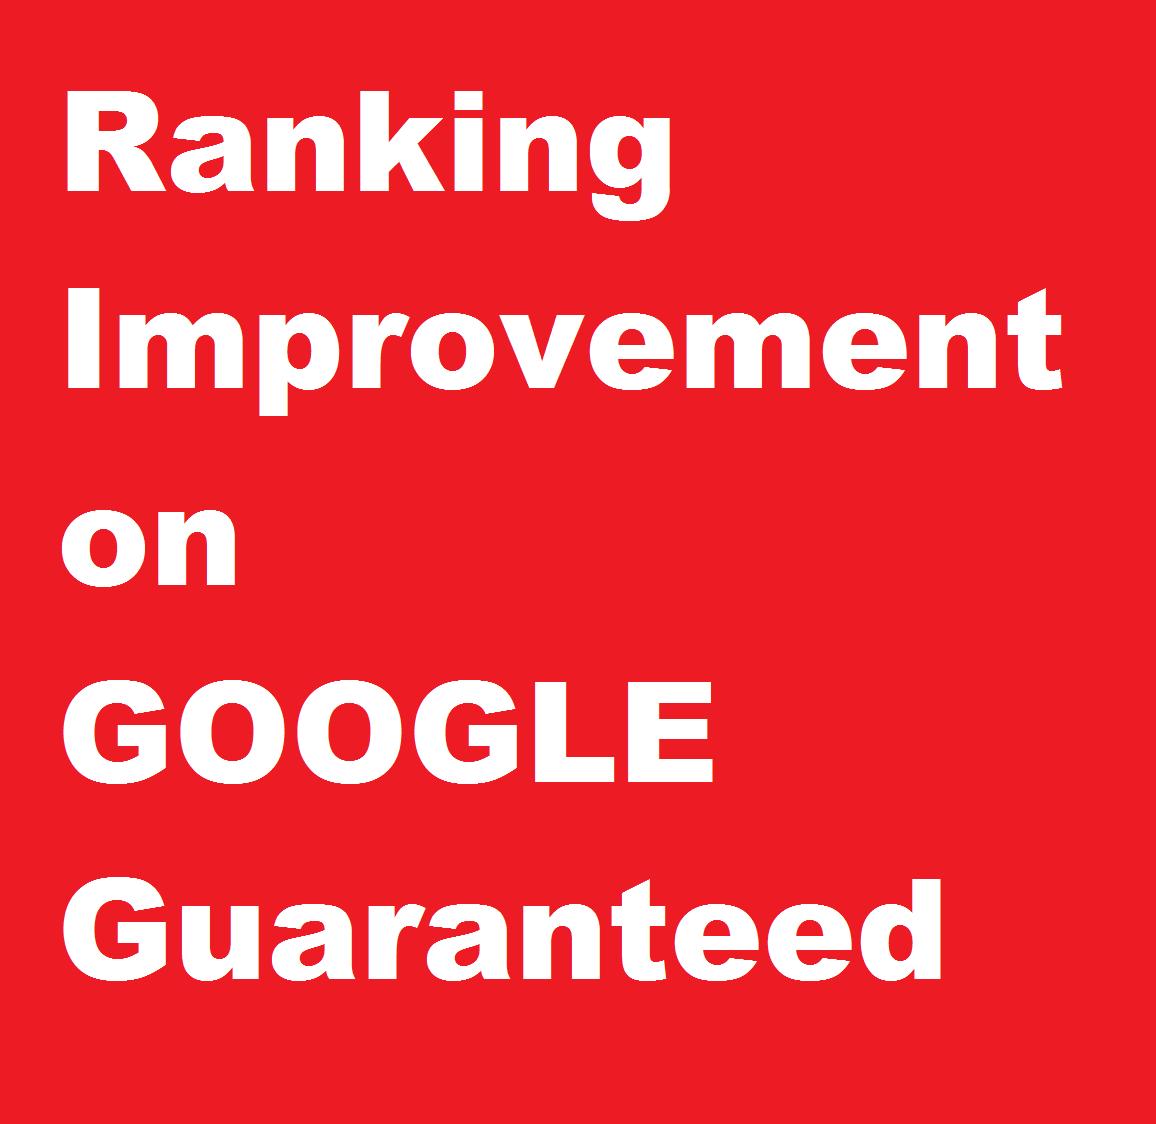 google seo ranking, Guaranteed Ranking Improvement on google in 4 weeks, link building service